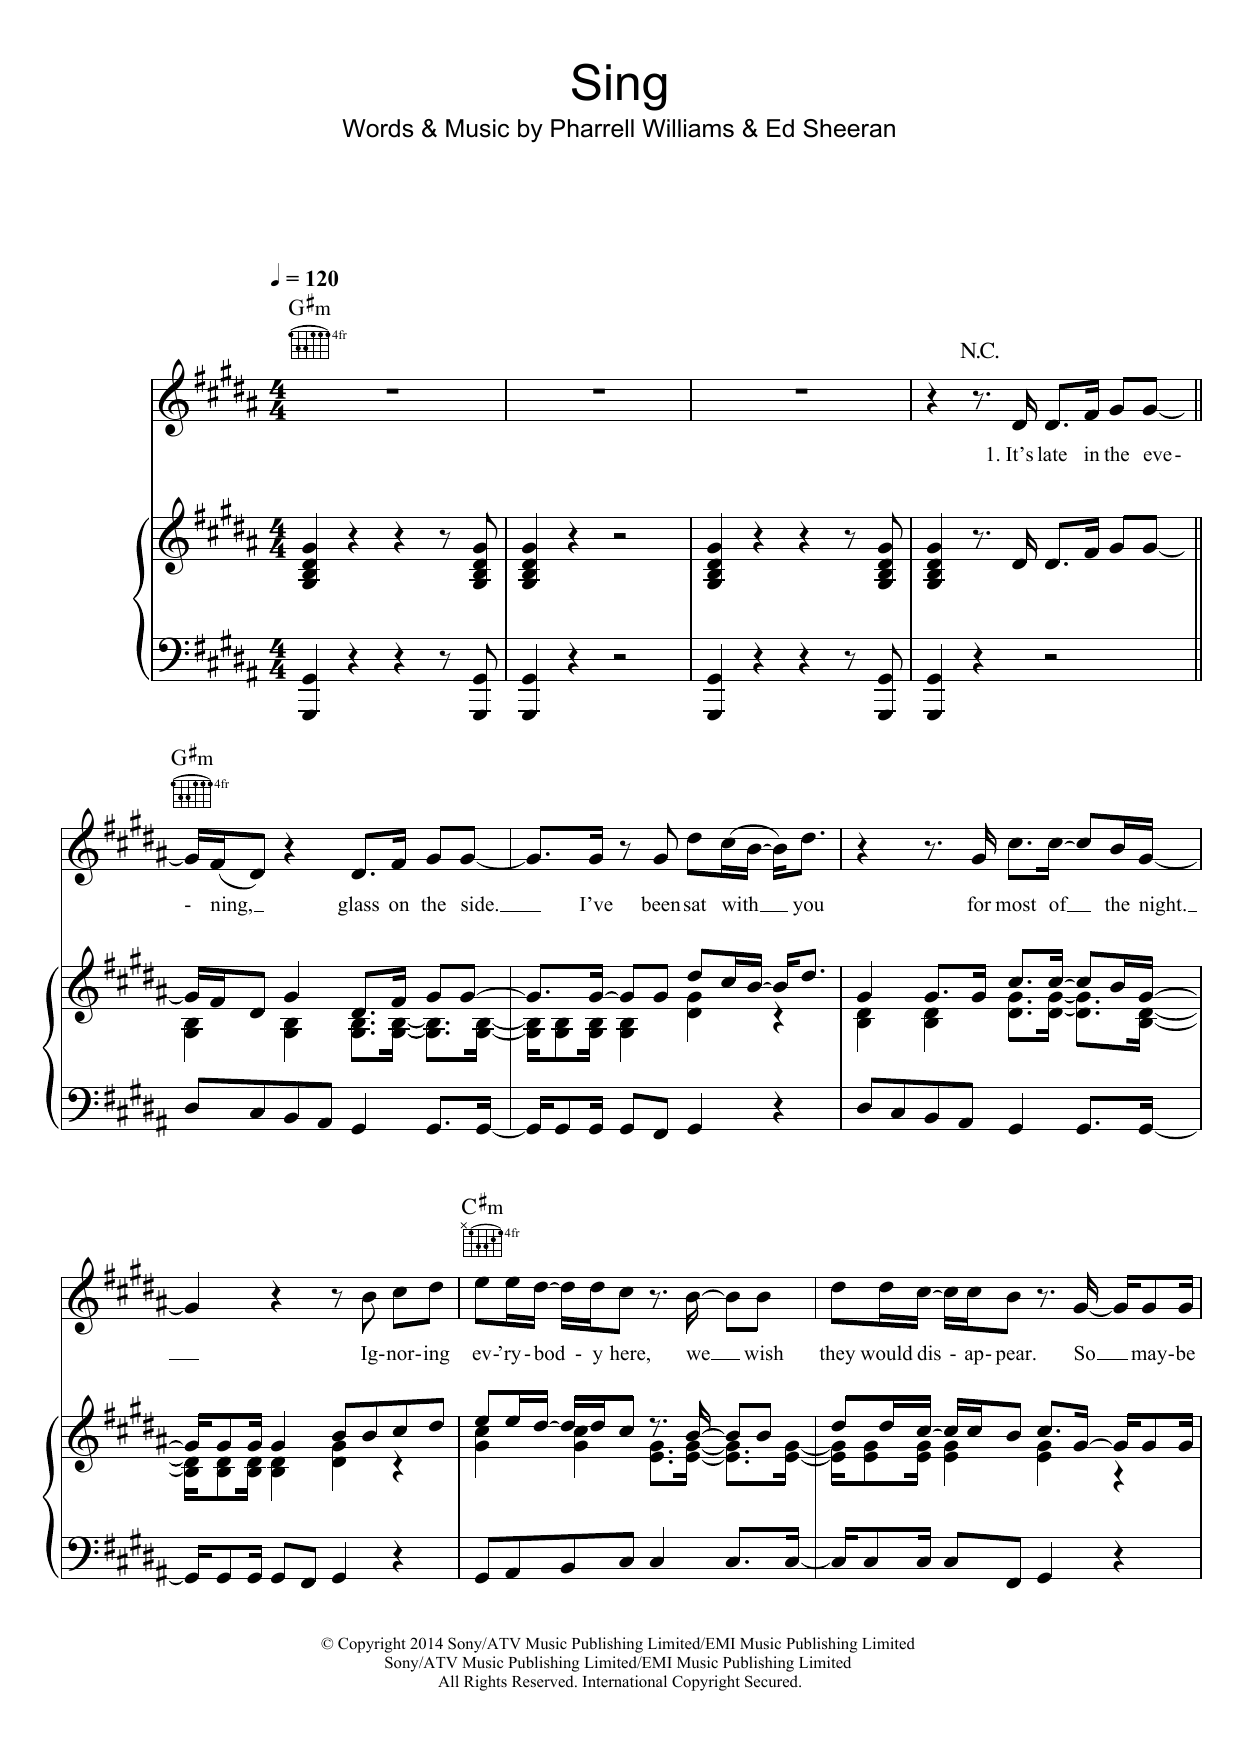 Ed Sheeran Sing Sheet Music Notes & Chords for Beginner Piano - Download or Print PDF